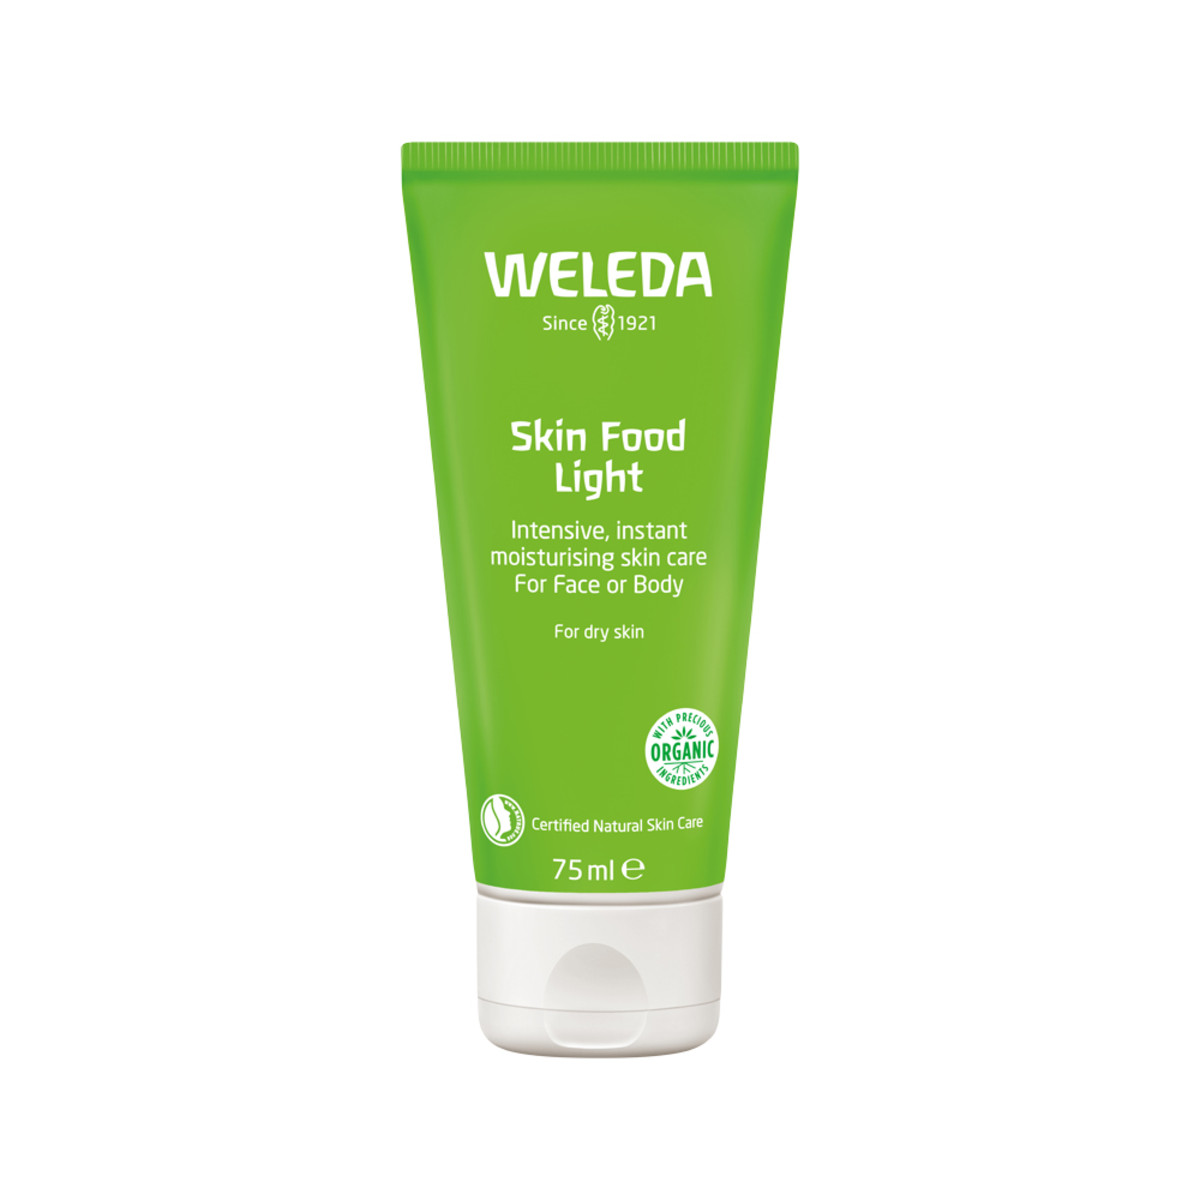 WELEDA - Skin Food Light